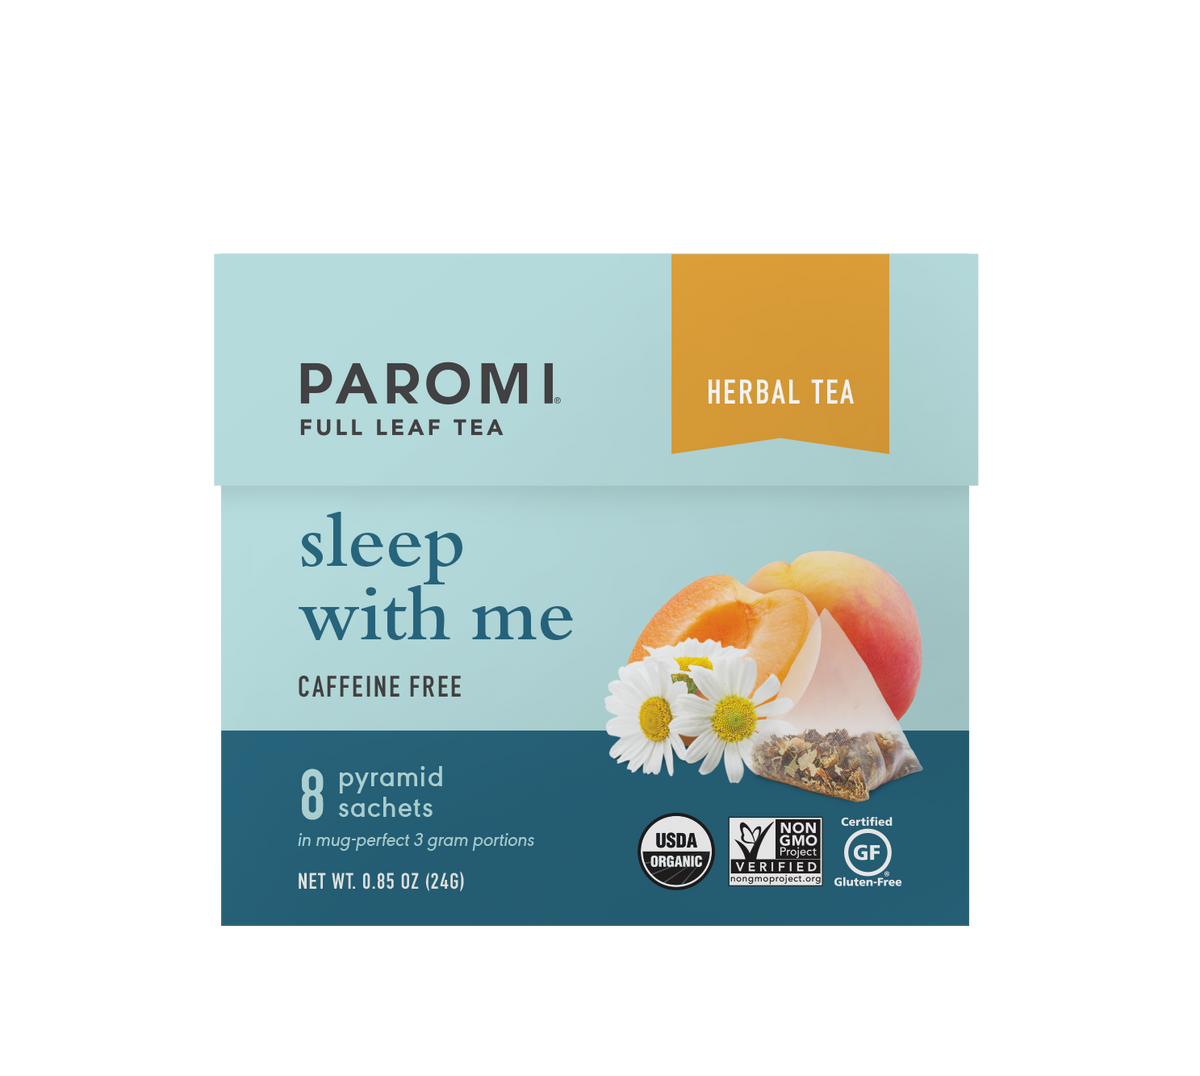 Organic Sleep With Me Herbal Tea, Caffeine Free, in Pyramid Tea Bags